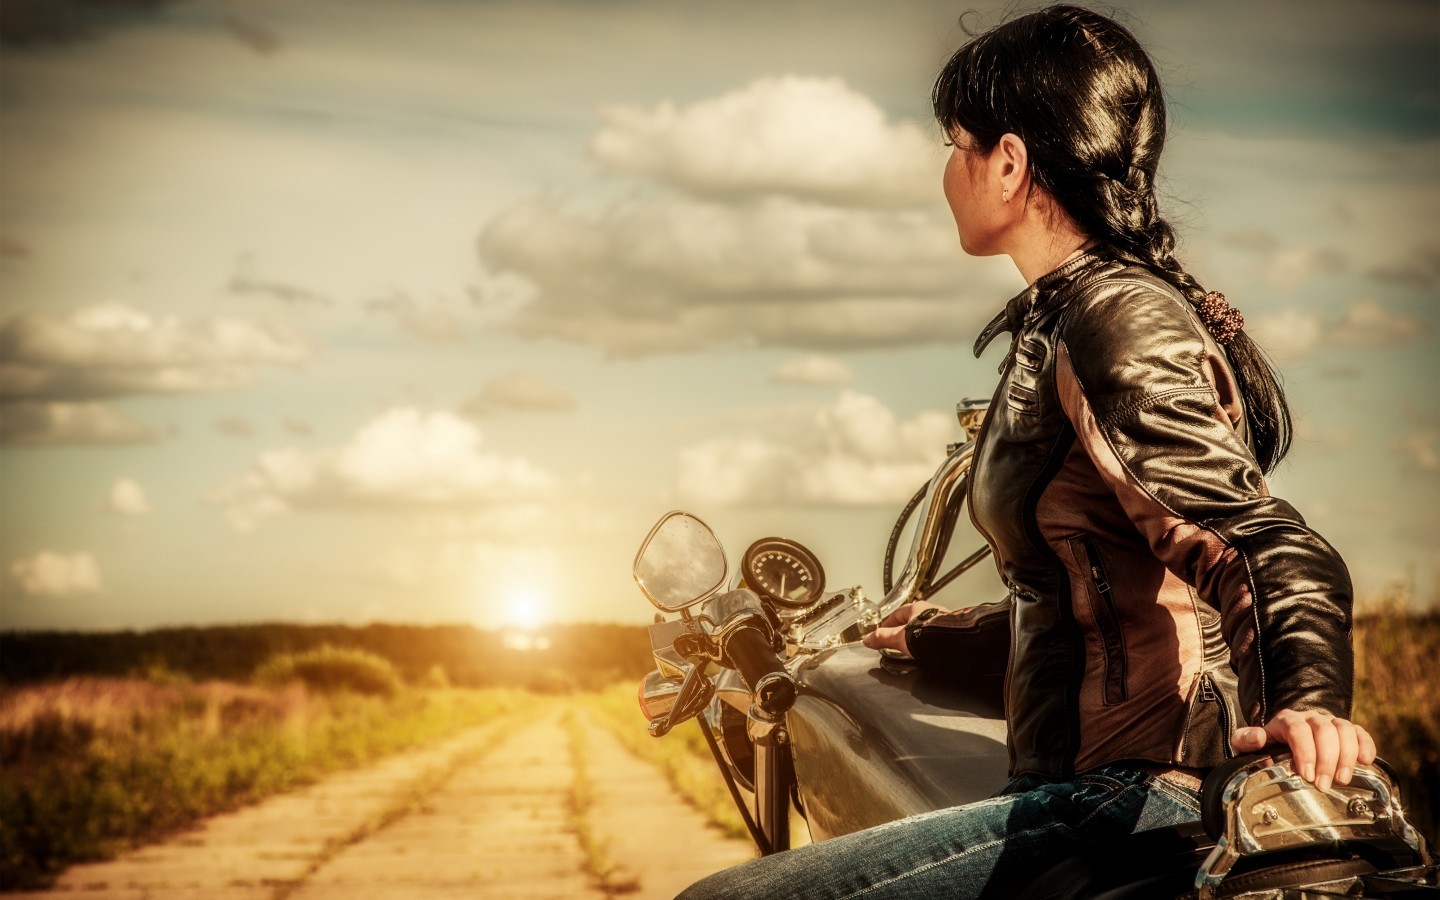 People 1440x900 women black hair motorcycle women outdoors outdoors model vehicle women with motorcycles clouds sunlight